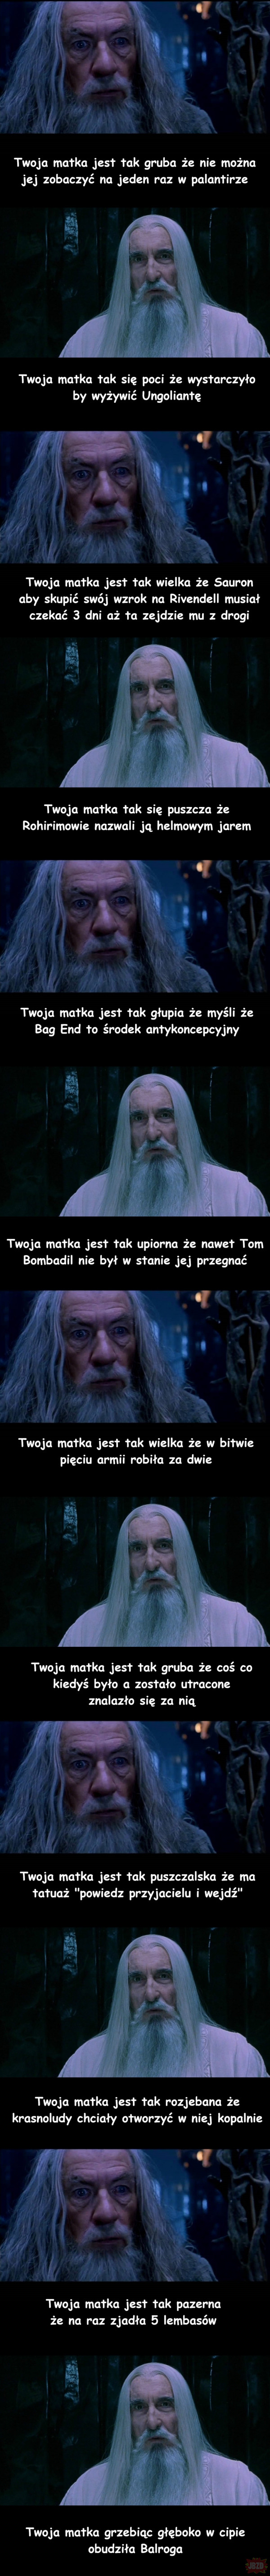 Gandalf vs Saruman - prawdziwa historia